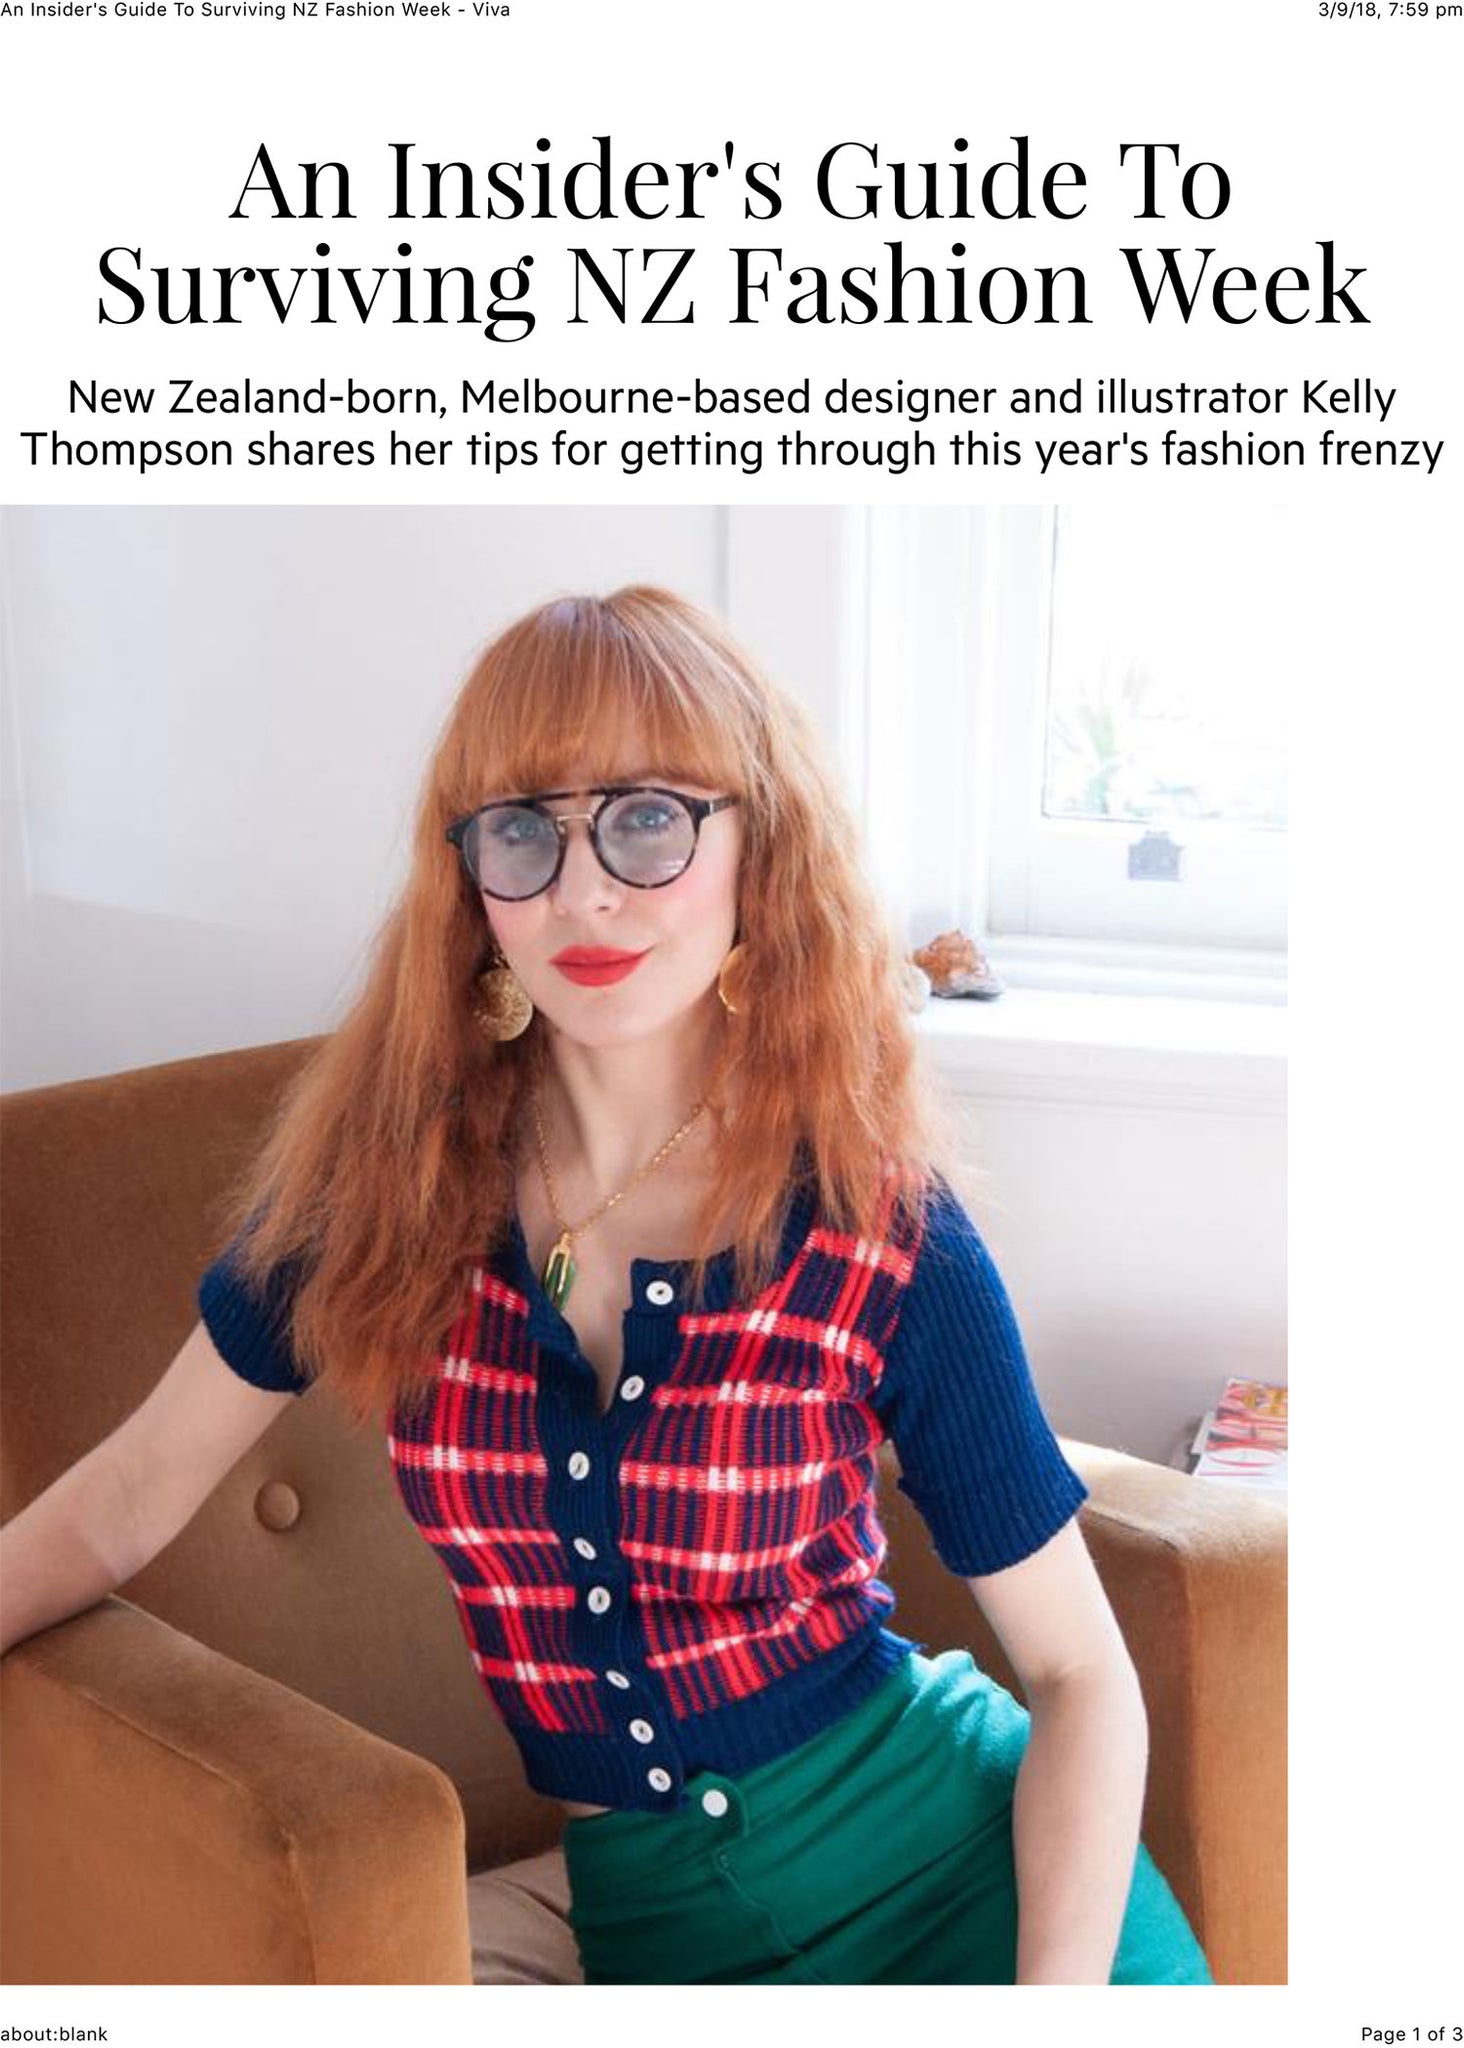 Melbourne Illustrator Kelly Thompson talks to Viva Magazine about surviving New Zealand Fashion Week